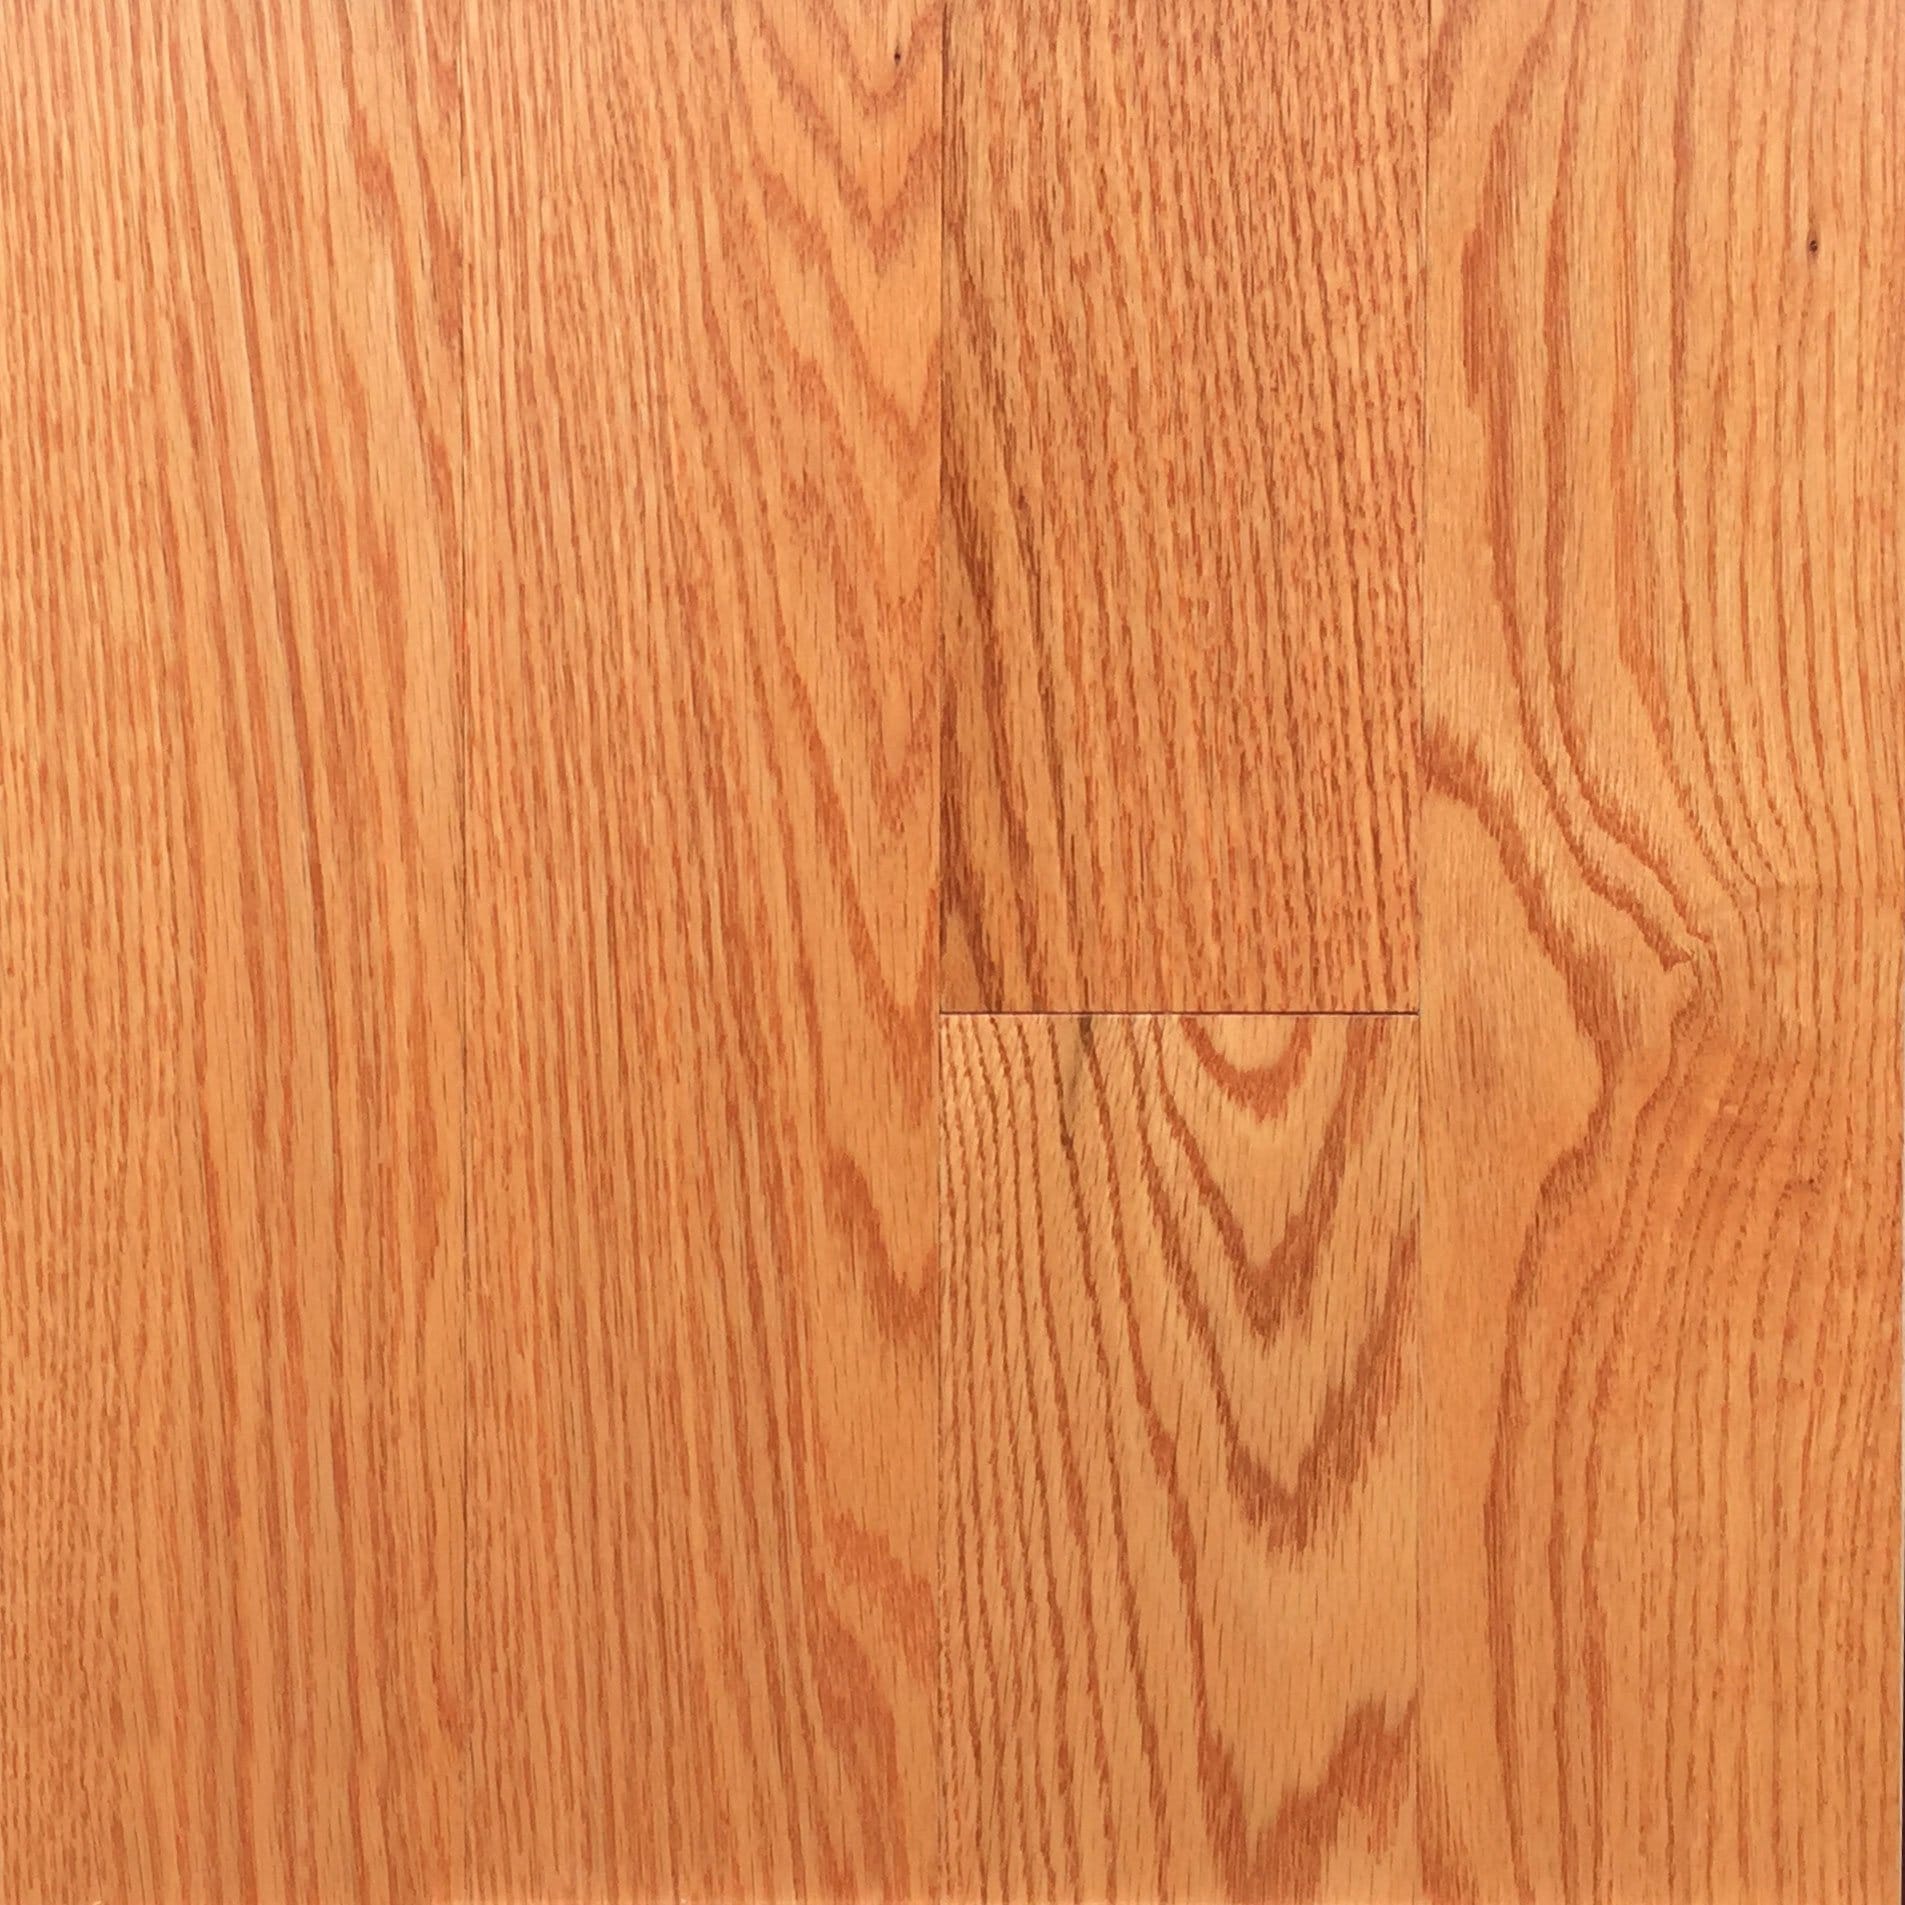 Red Oak Hardwood Flooring Flooring Liquidators